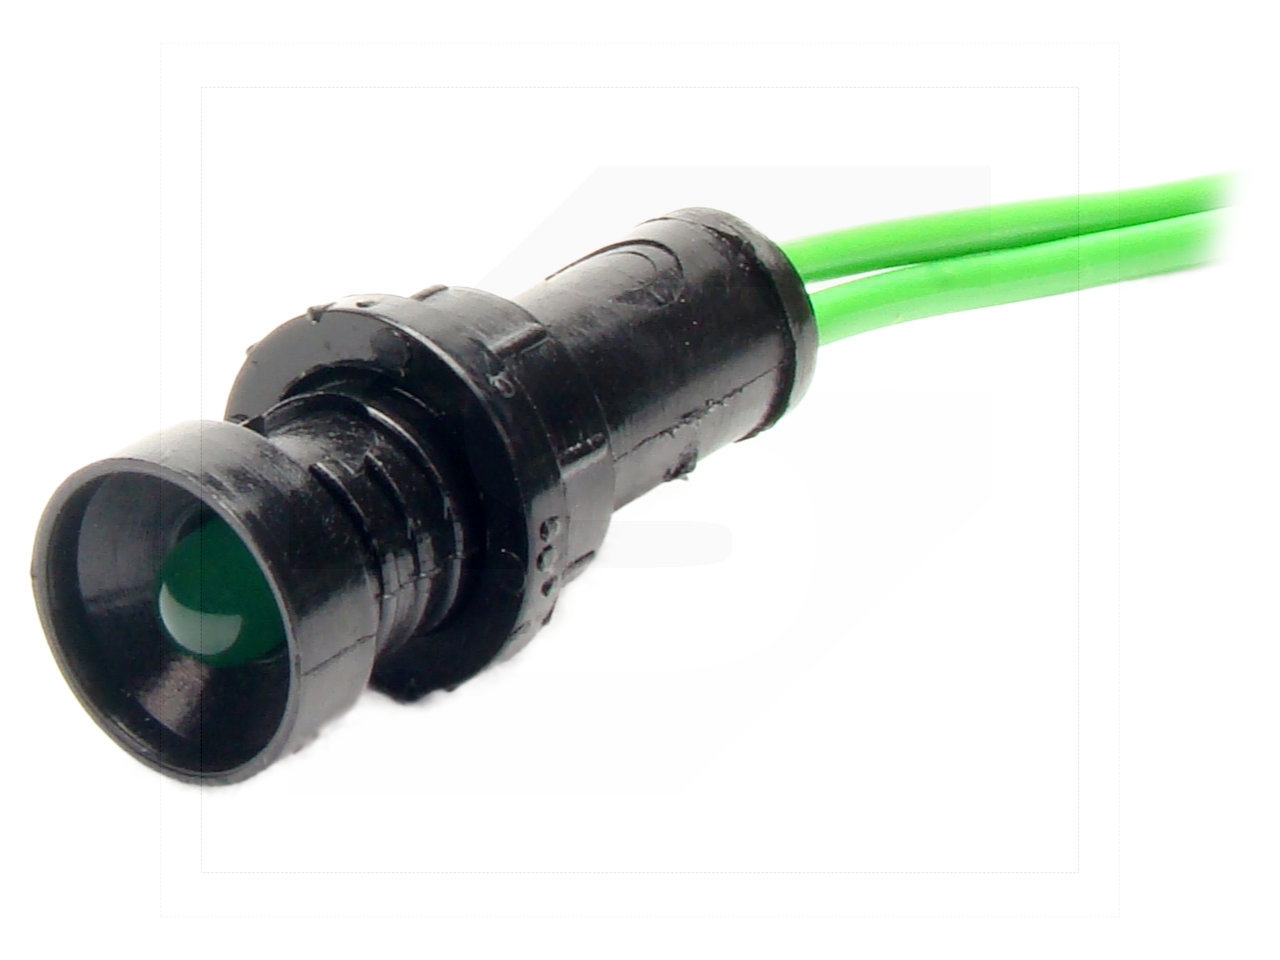 Lampka diodowa KLP-5/G 230VAC/DC typu LED 230V (klosz 5mm)/green